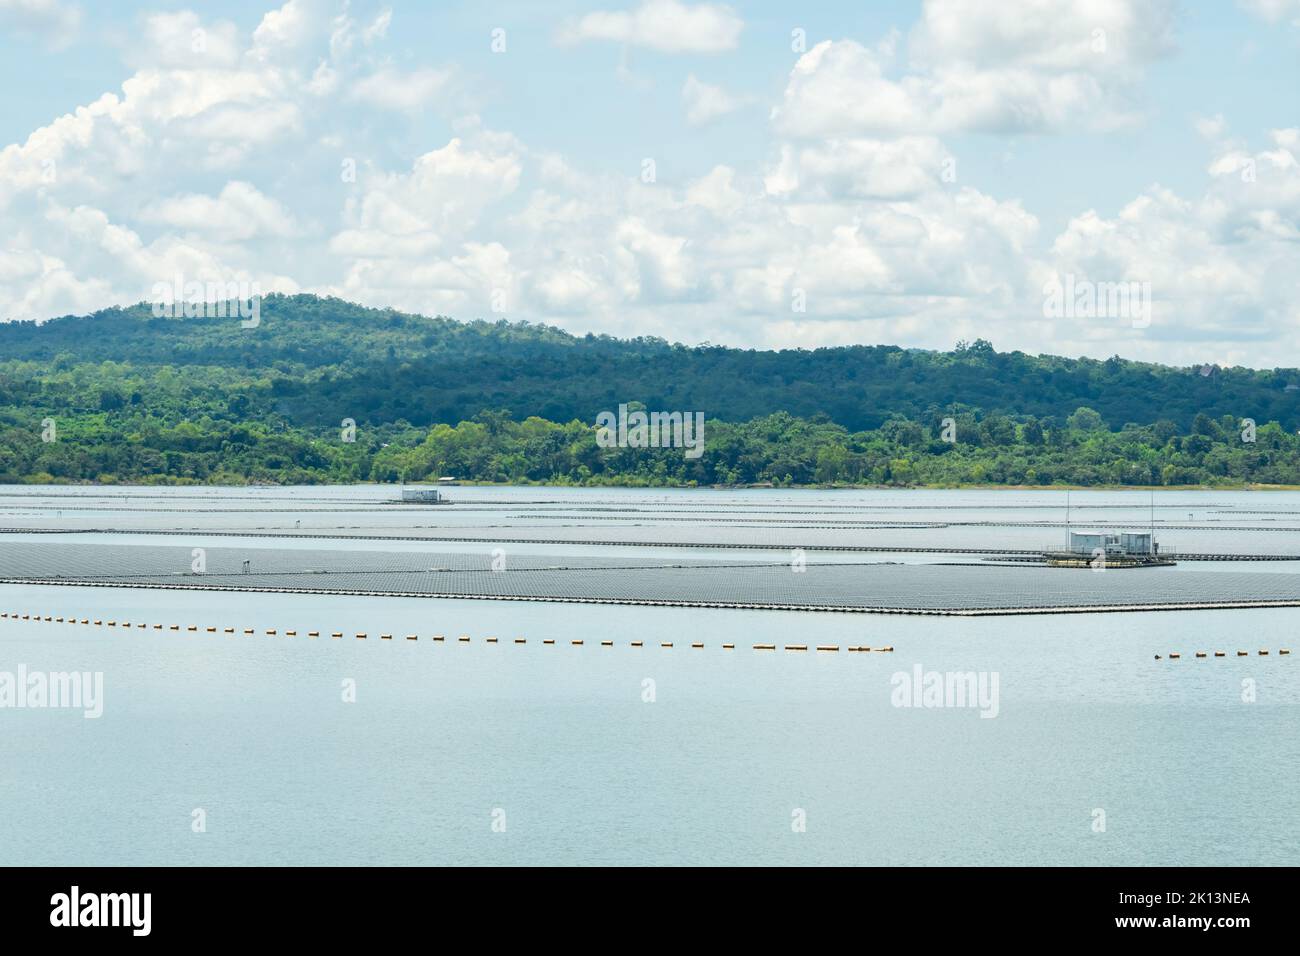 Floating solar farm or floating photovoltaics. Solar power. Landscape of solar panels floating on water in reservoir or lake. Solar technology. Stock Photo